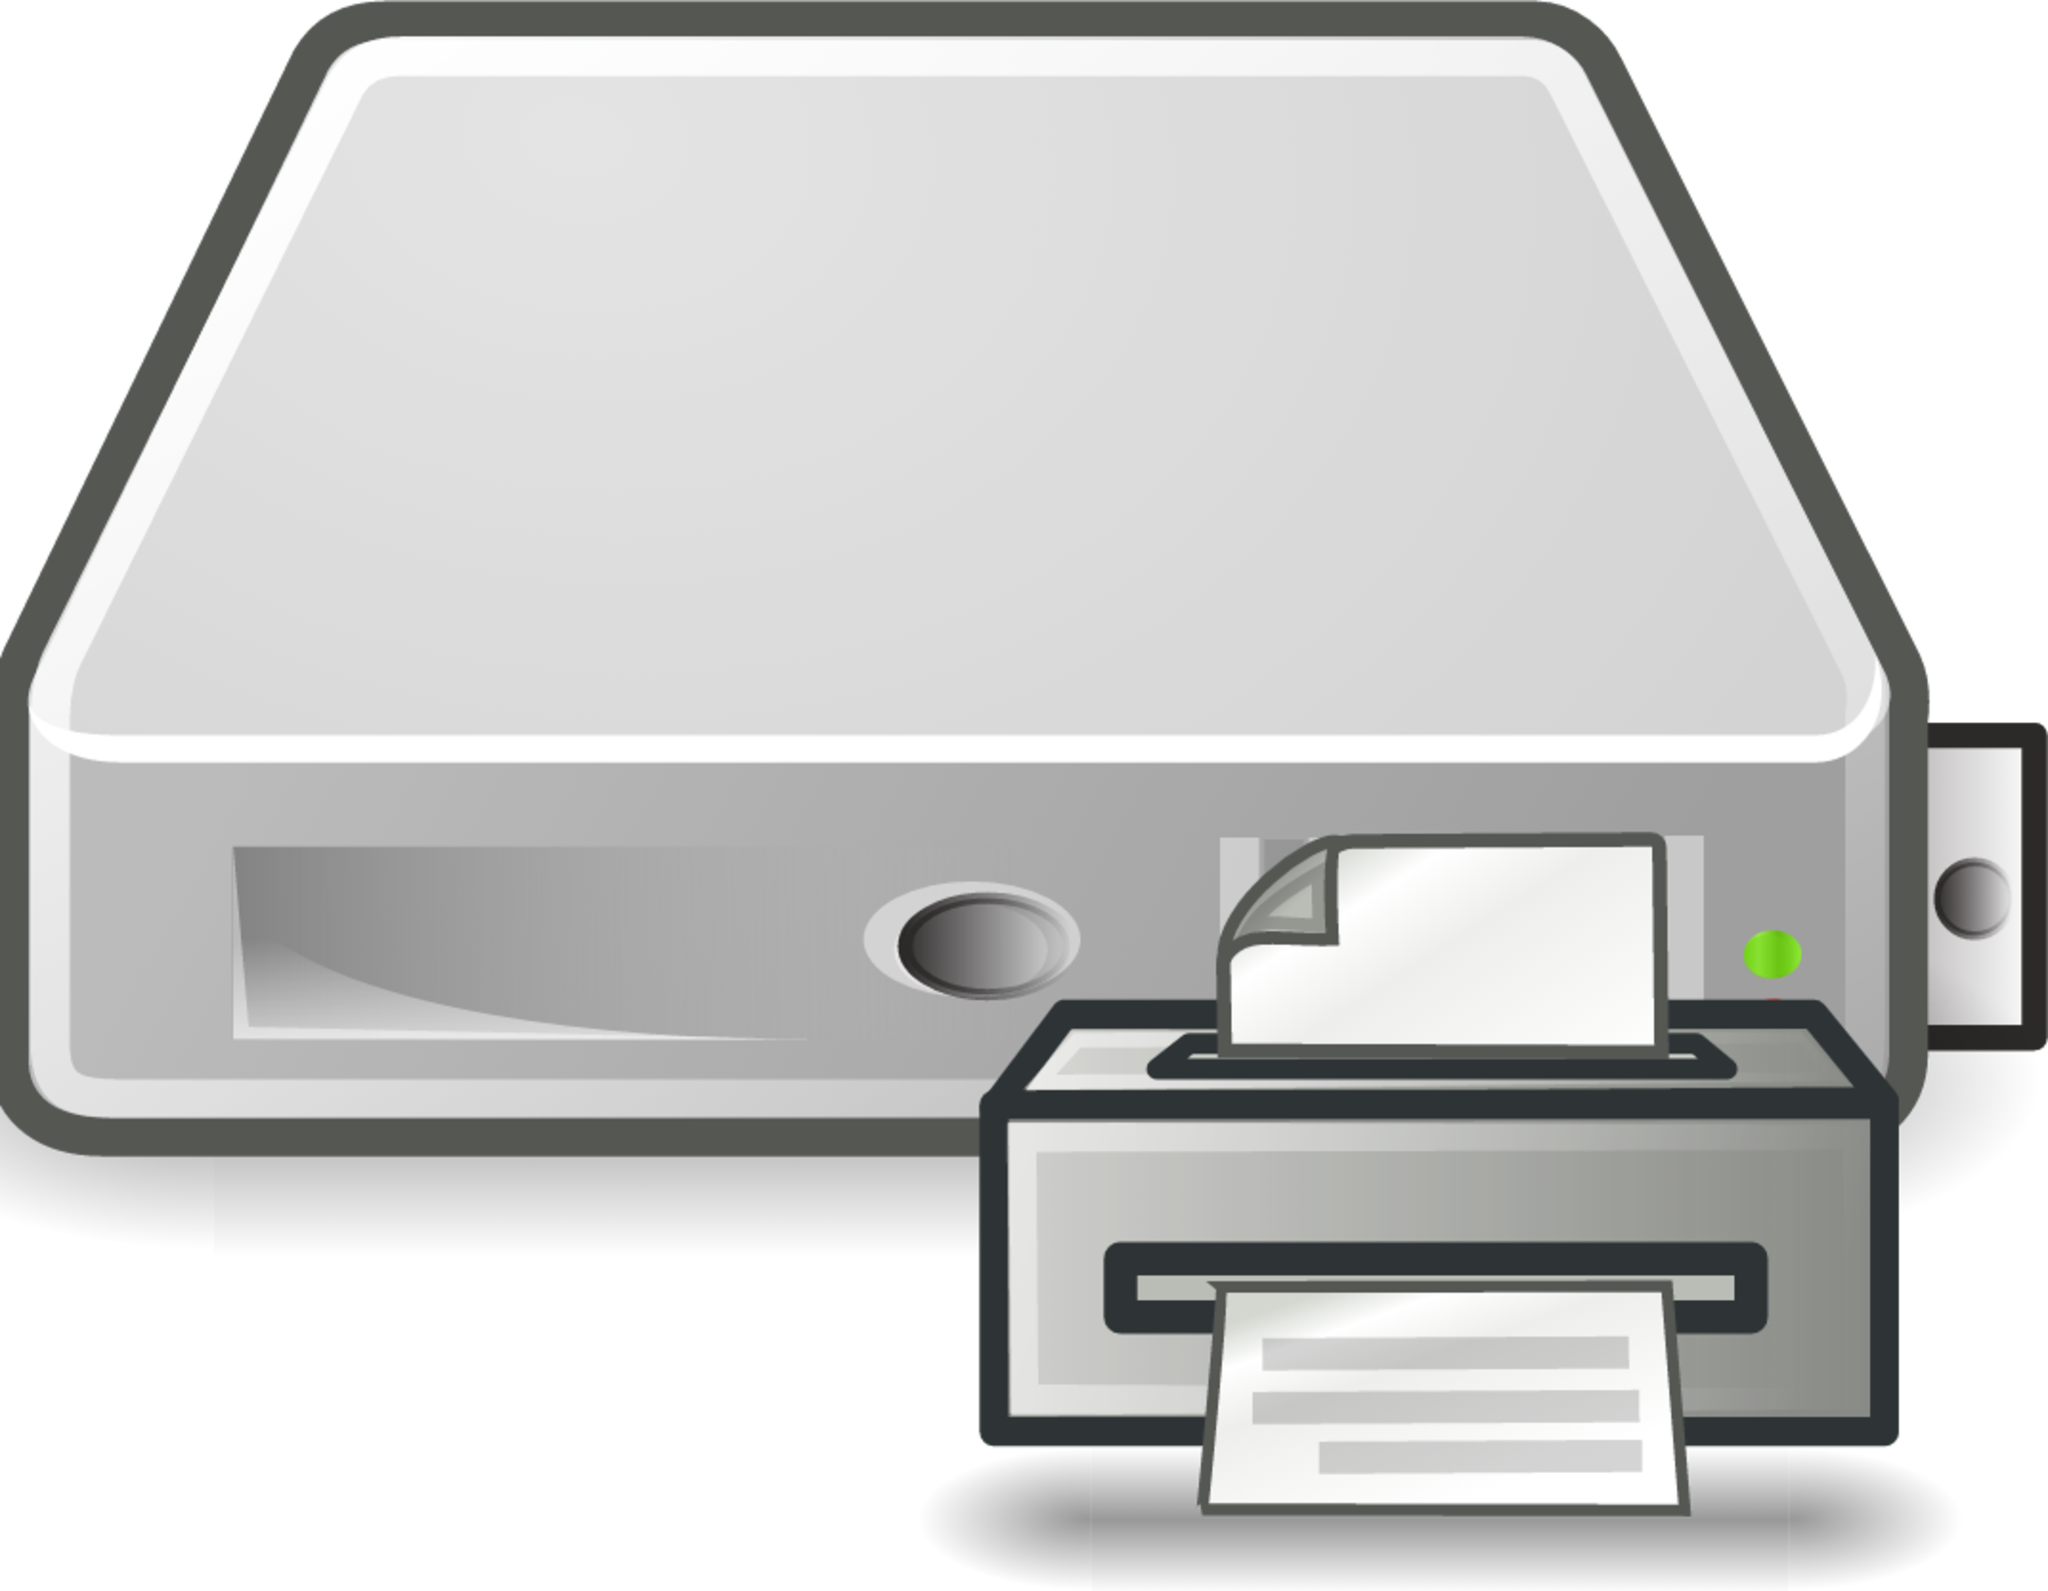 server print icon